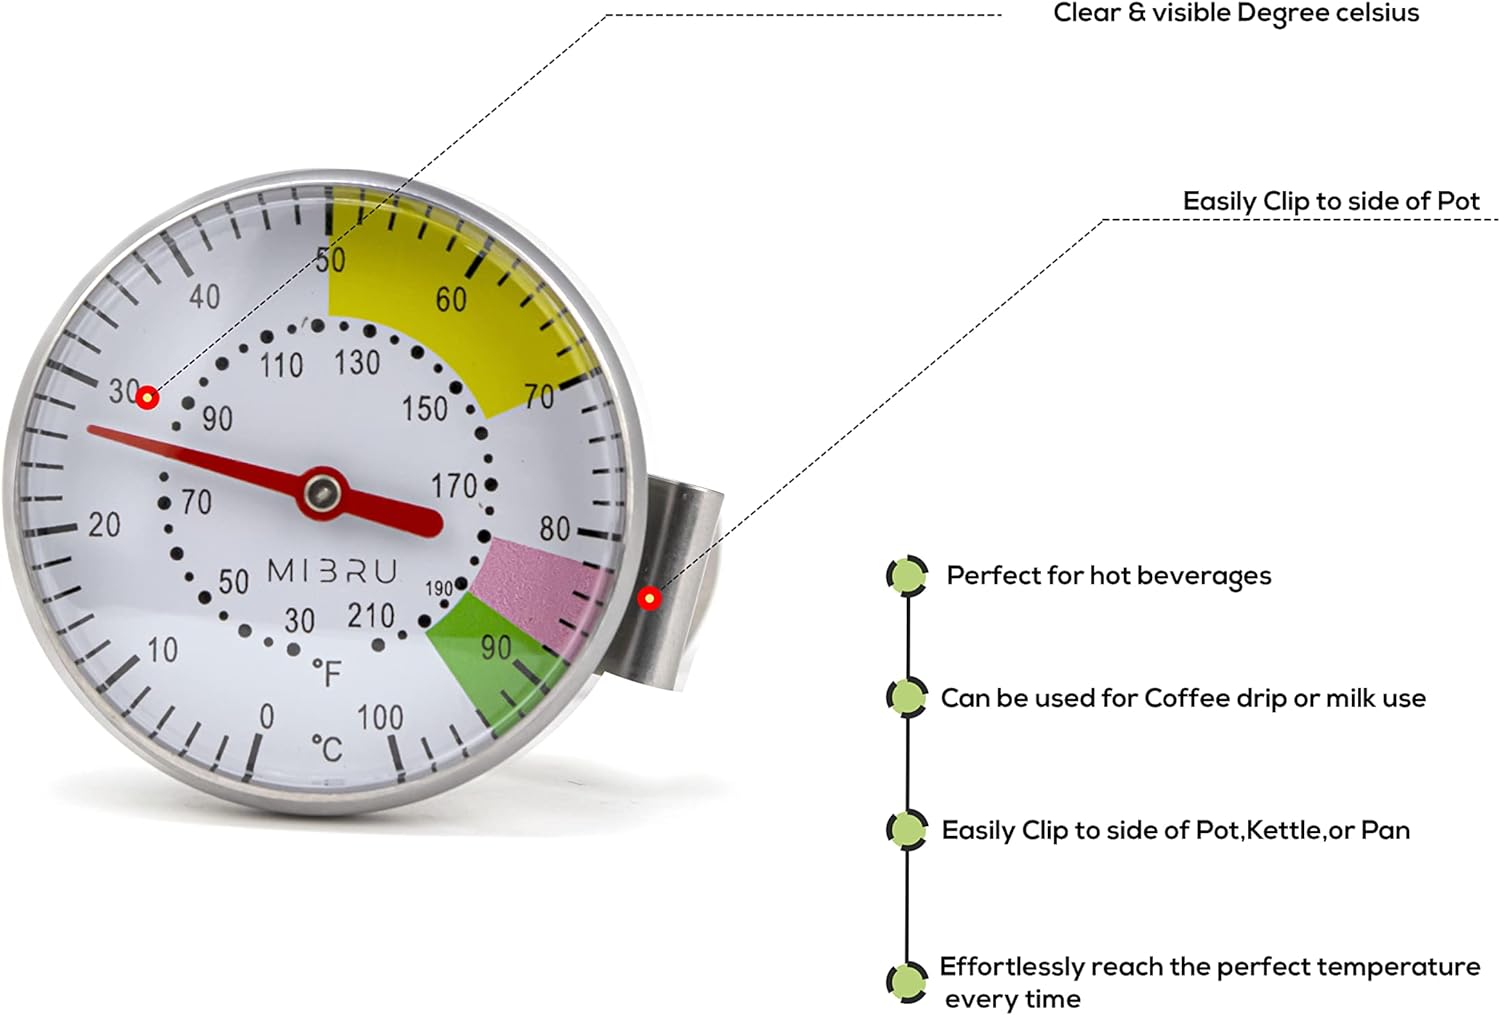 MIBRU A suitable thermometer for specialty coffee and milk temperature مقياس حرارة للقهوة المختصة و درجة حرارة الحليب, min 2 yrs